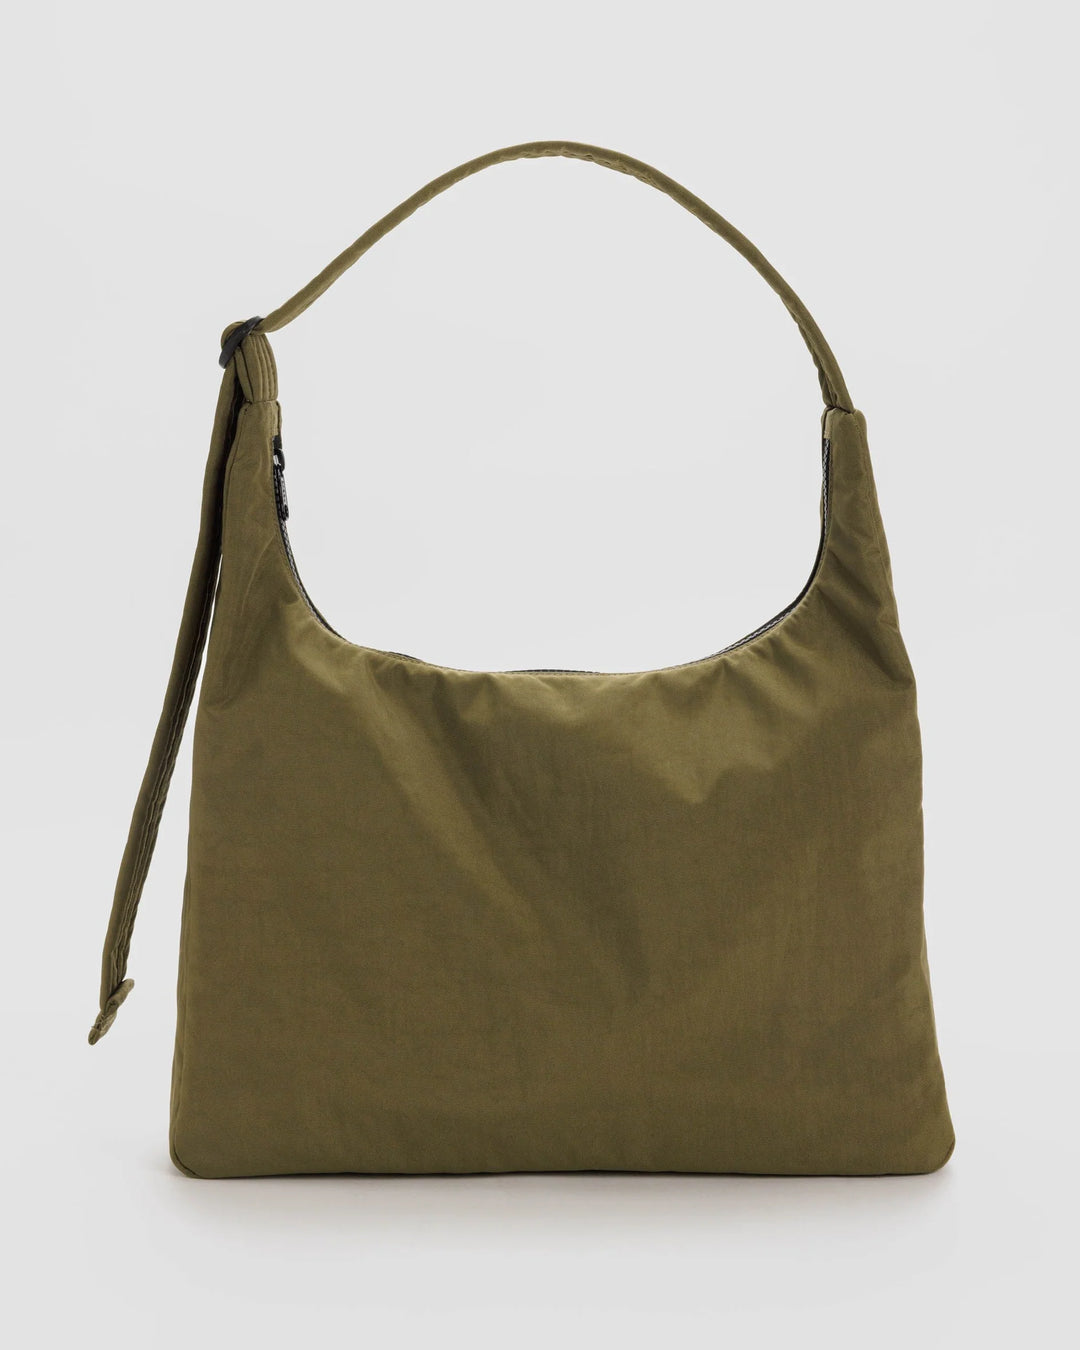 Baggu - Nylon Shoulder Bag - Seaweed